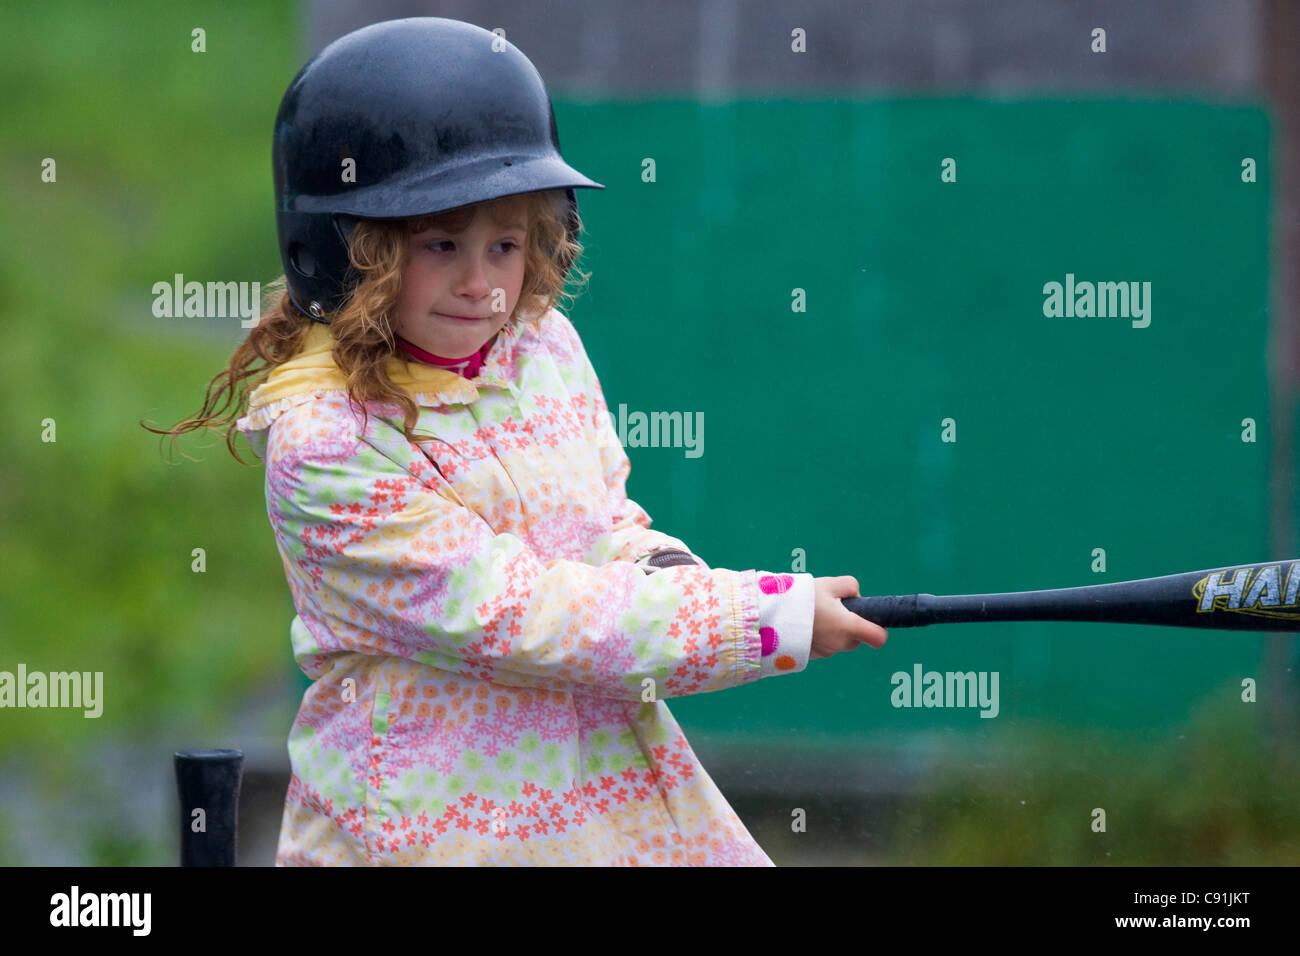 Young girl swinging at T-ball while wearing rain coat, Cordova little league, Cordova, Southcentral Alaska, Summer Stock Photo